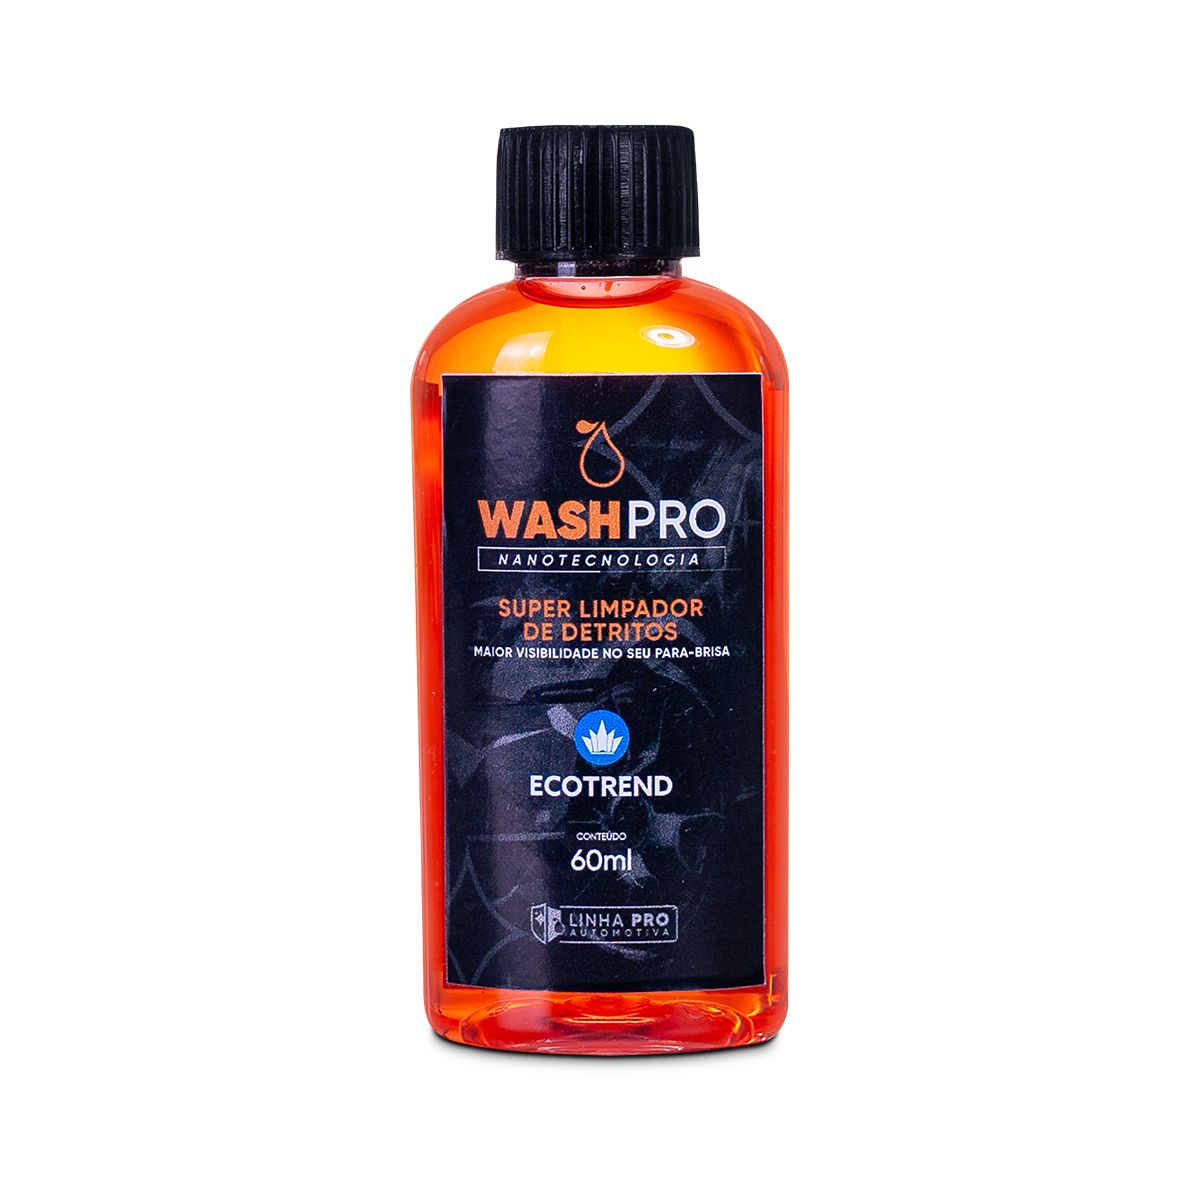 WashPRO - Super limpador de detritos